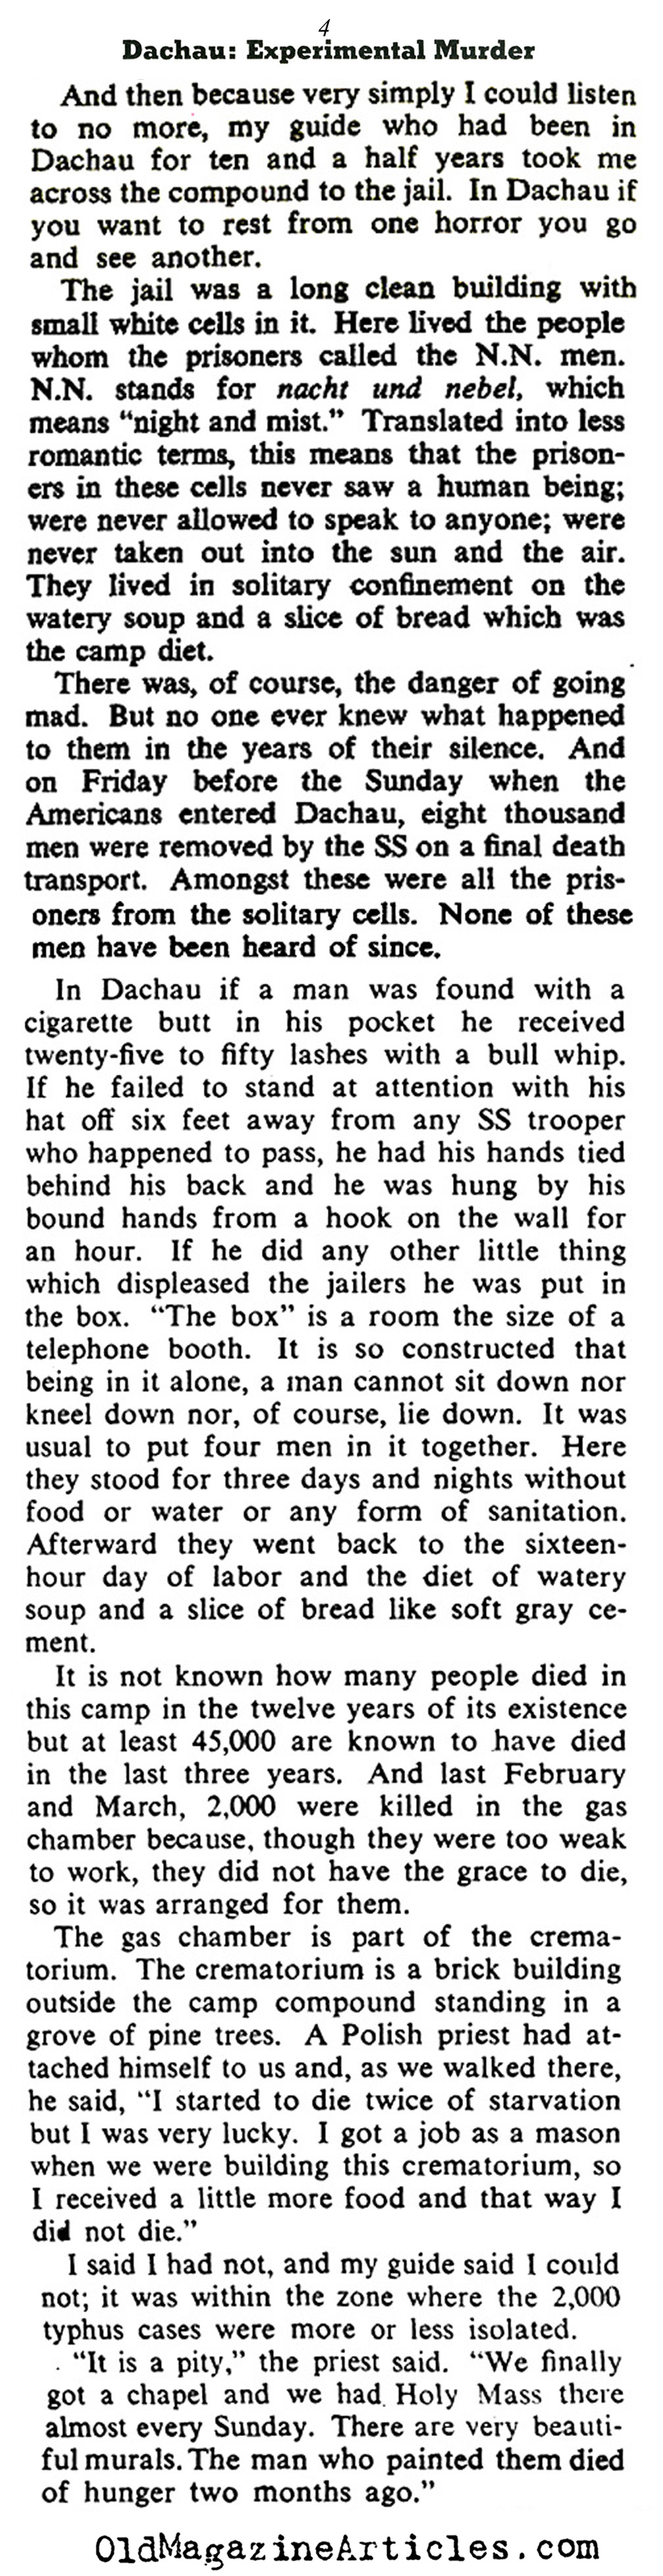 Dachau (Collier's Magazine, 1945)